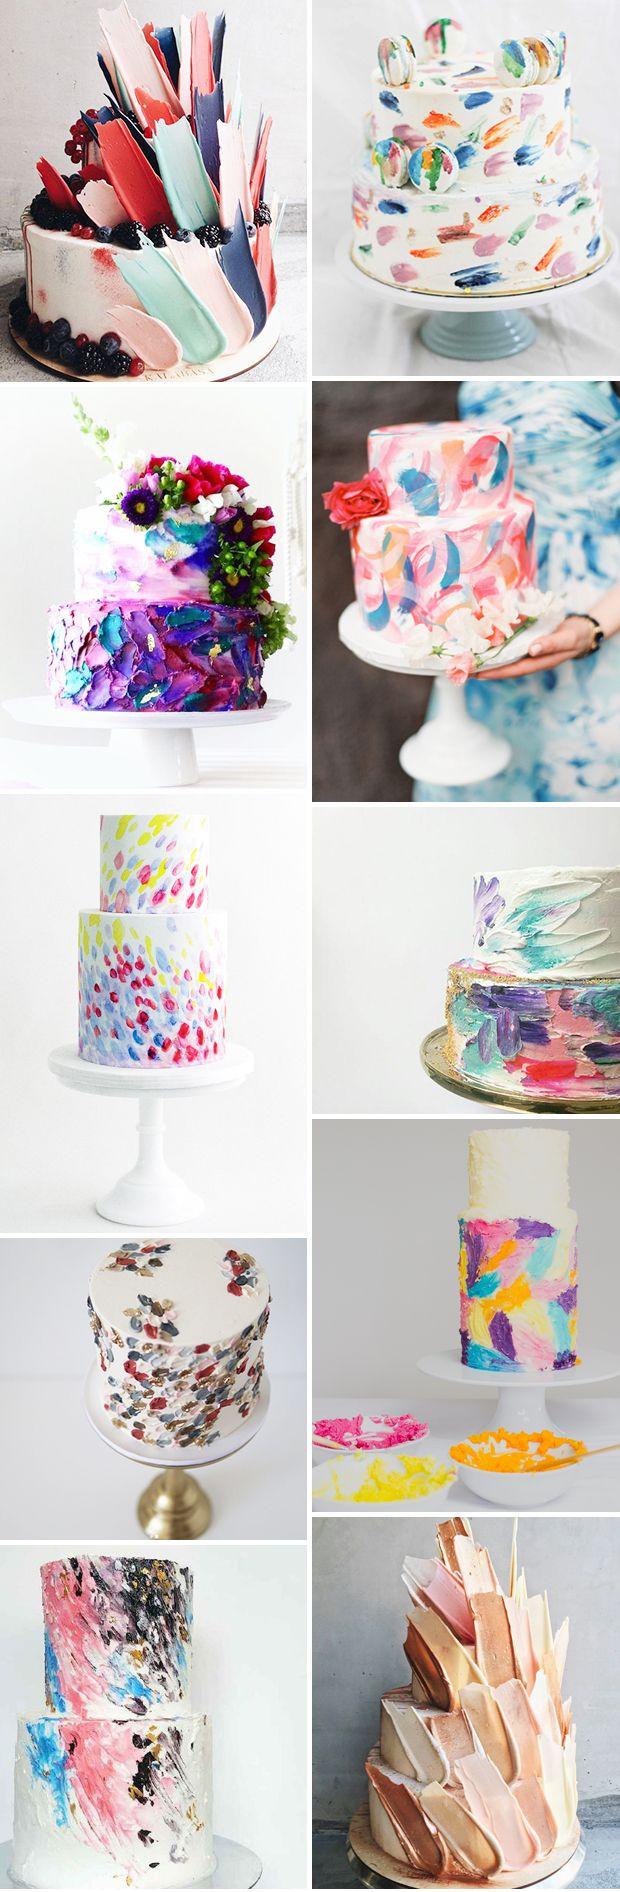 Mariage - Brushstroke Cakes - 12 Phenomenal Wedding Cake Works Of Art